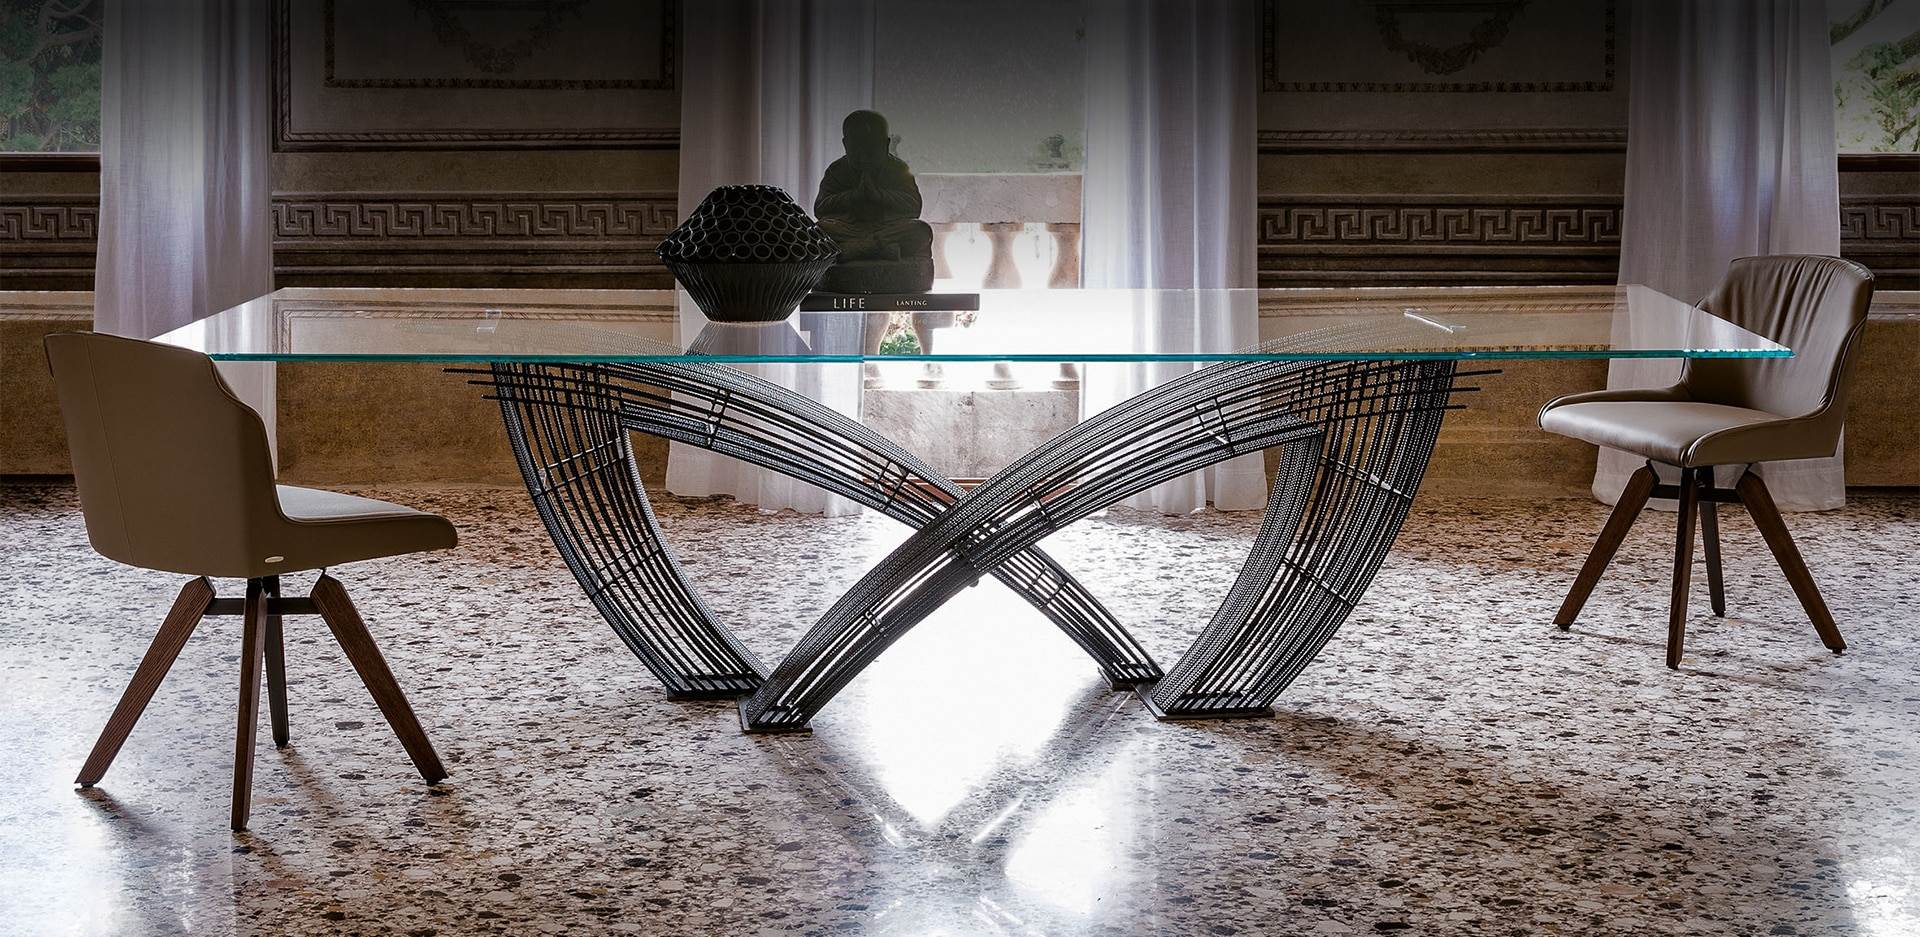 High-end Italian designer furniture